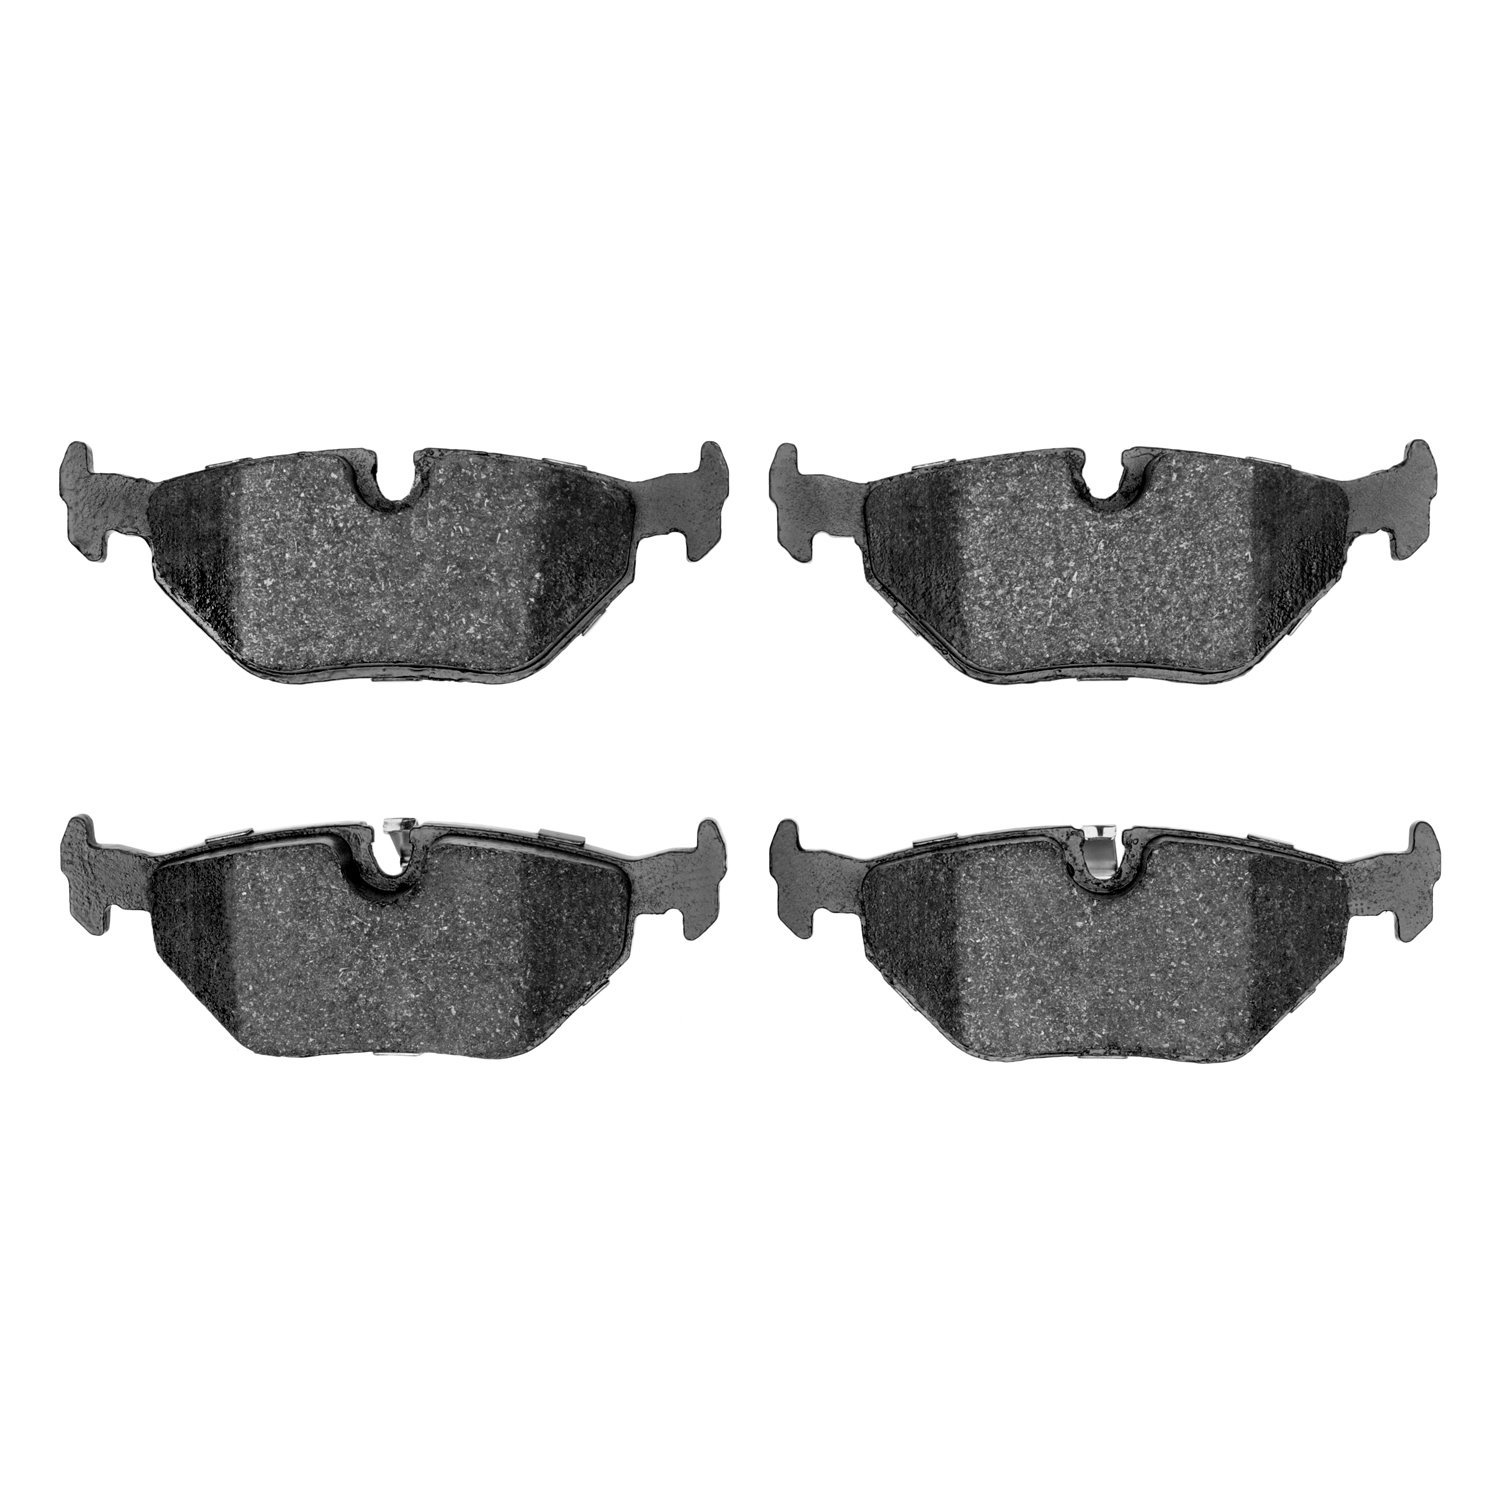 1310-0692-00 3000-Series Ceramic Brake Pads, 1991-2010 Multiple Makes/Models, Position: Rear